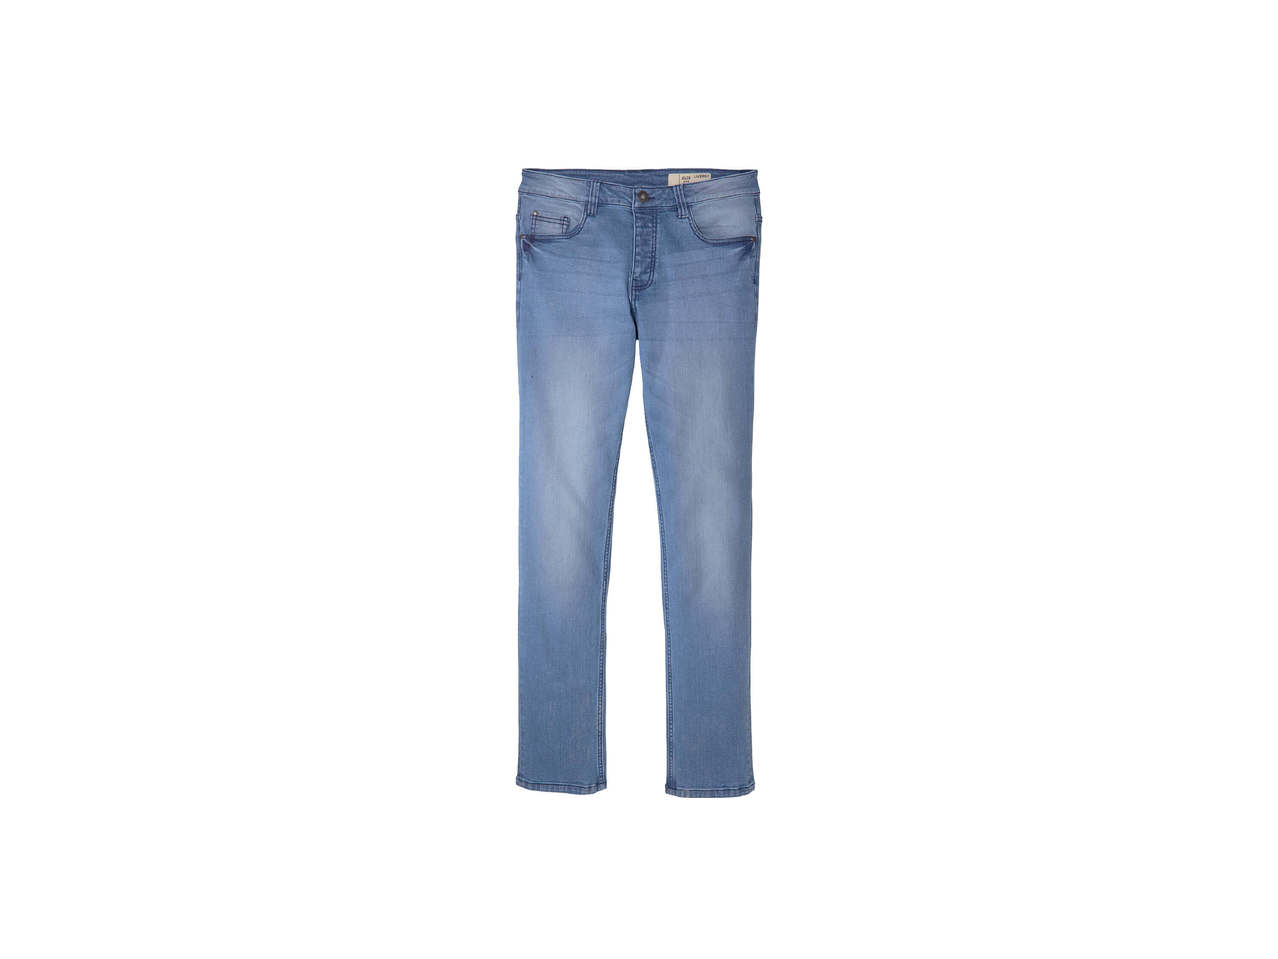 LIVERGY(R) Jeans slimfit